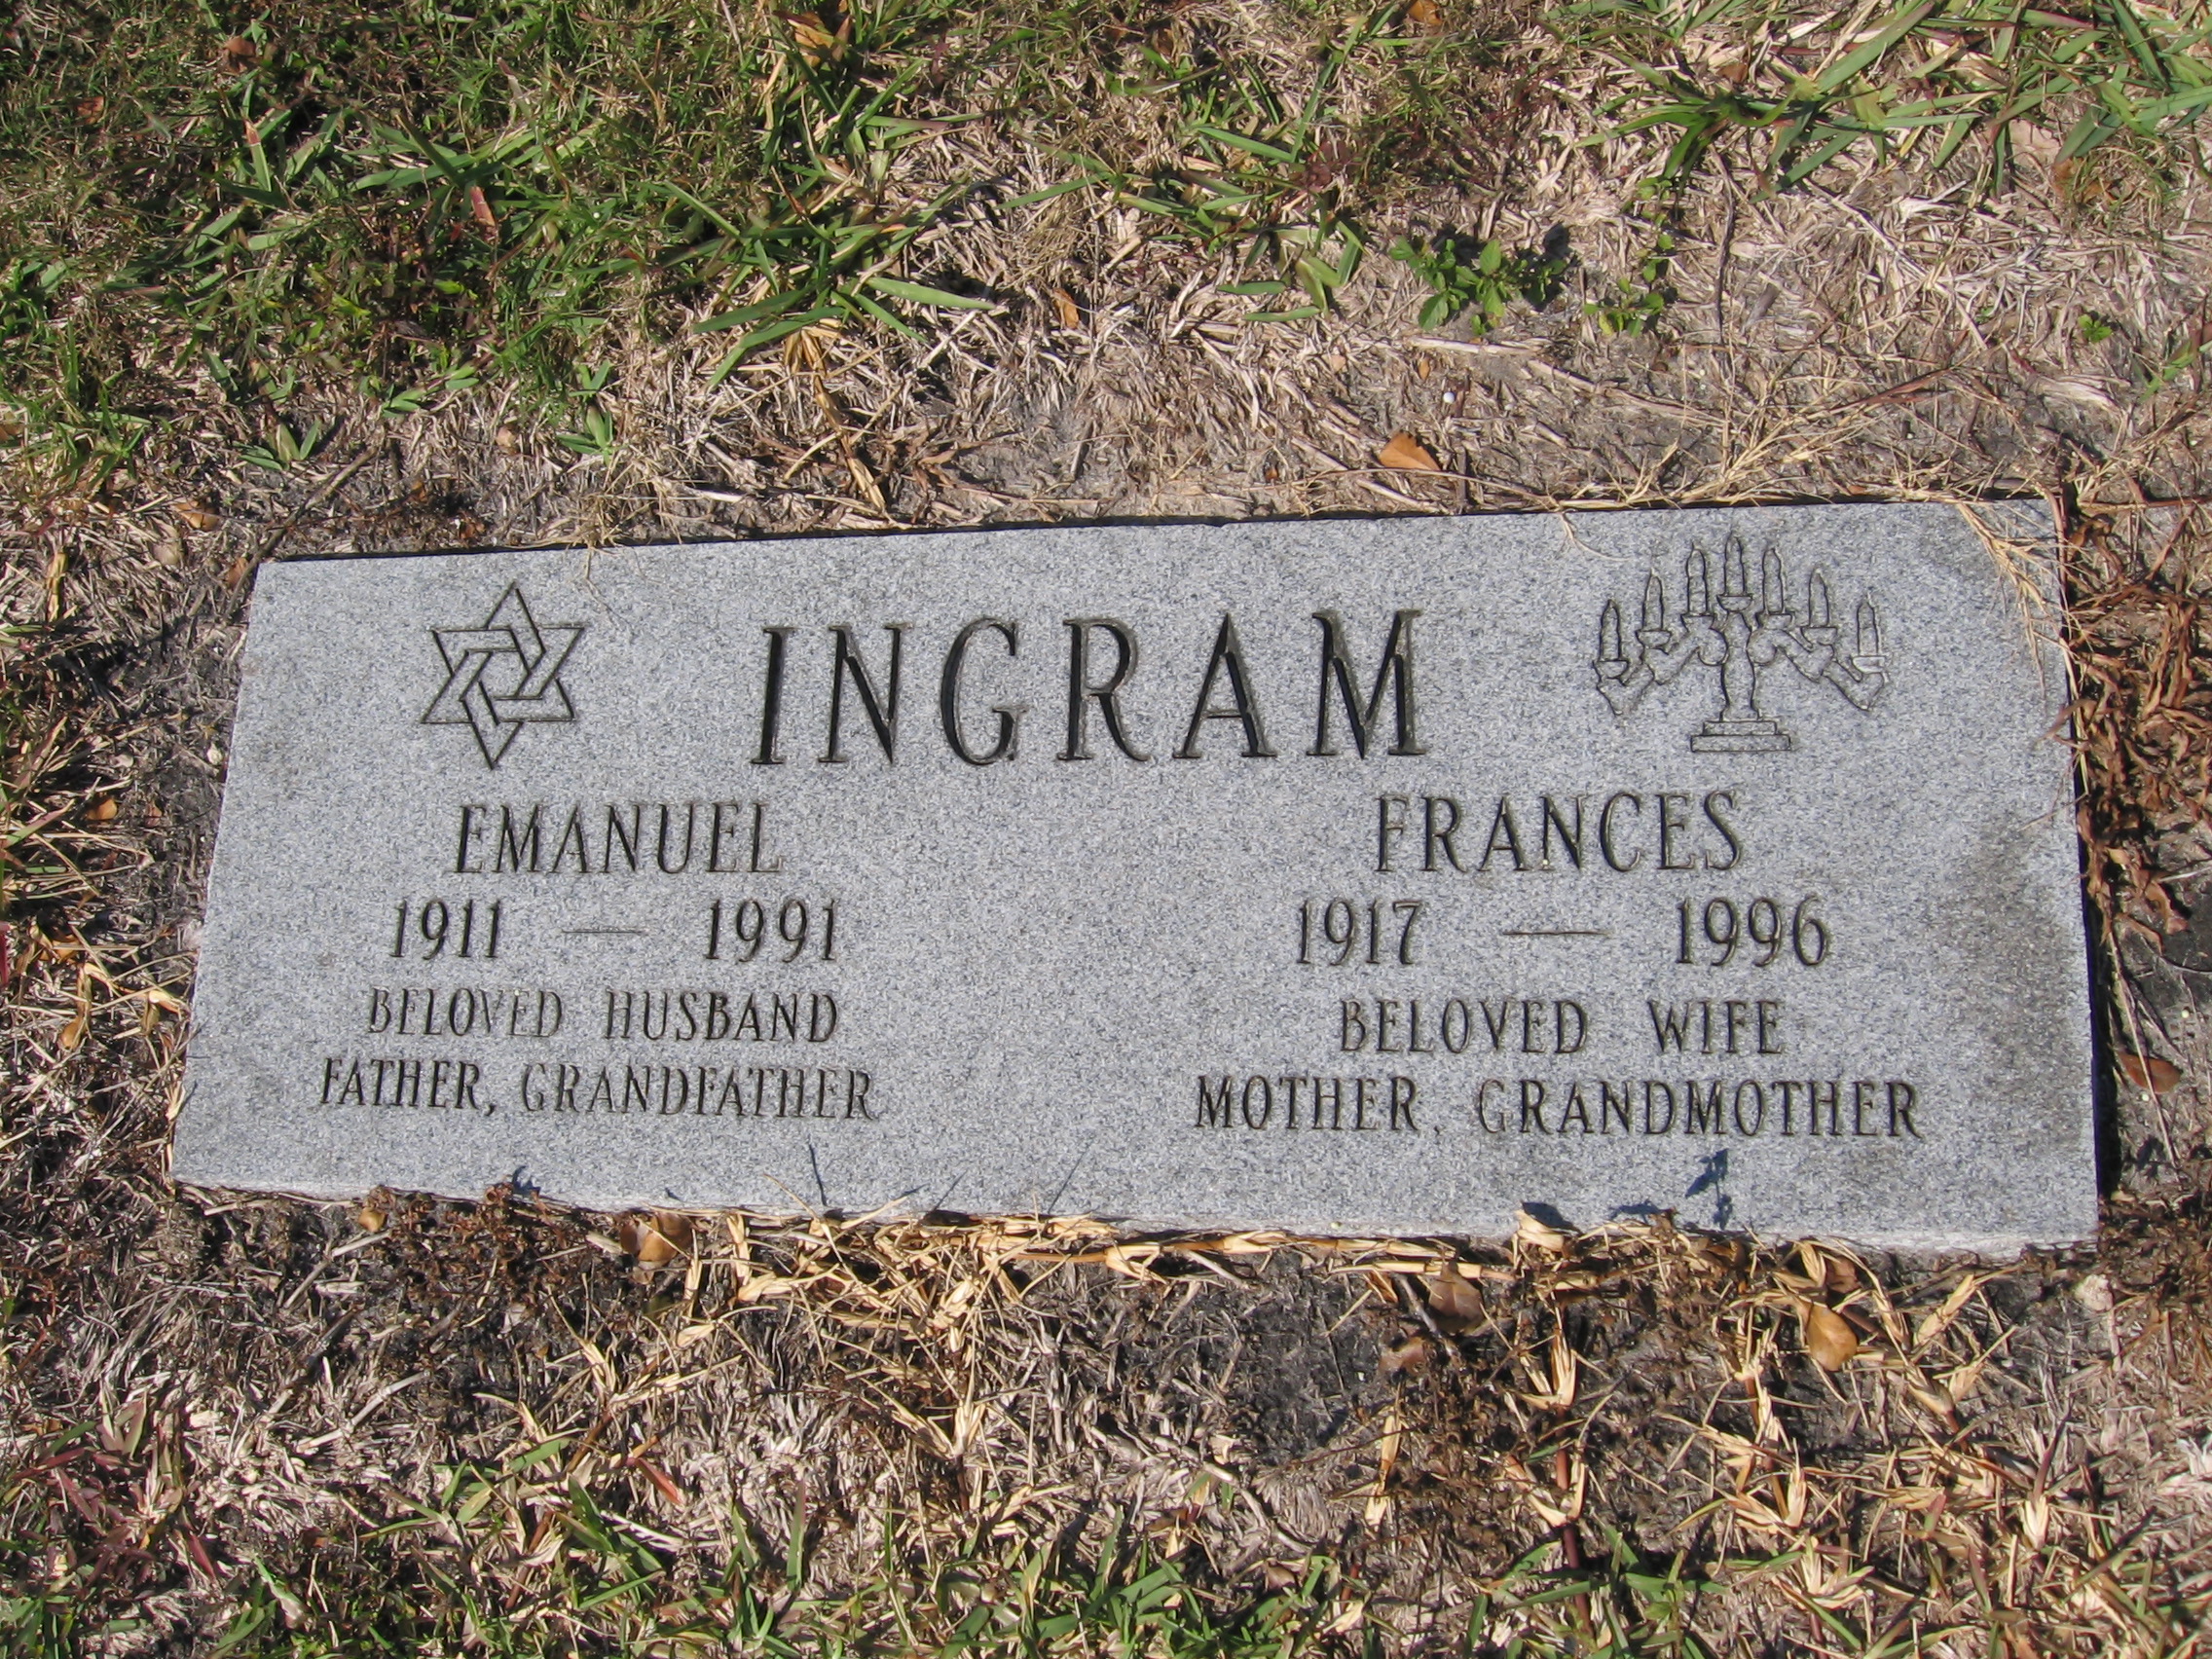 Frances Ingram